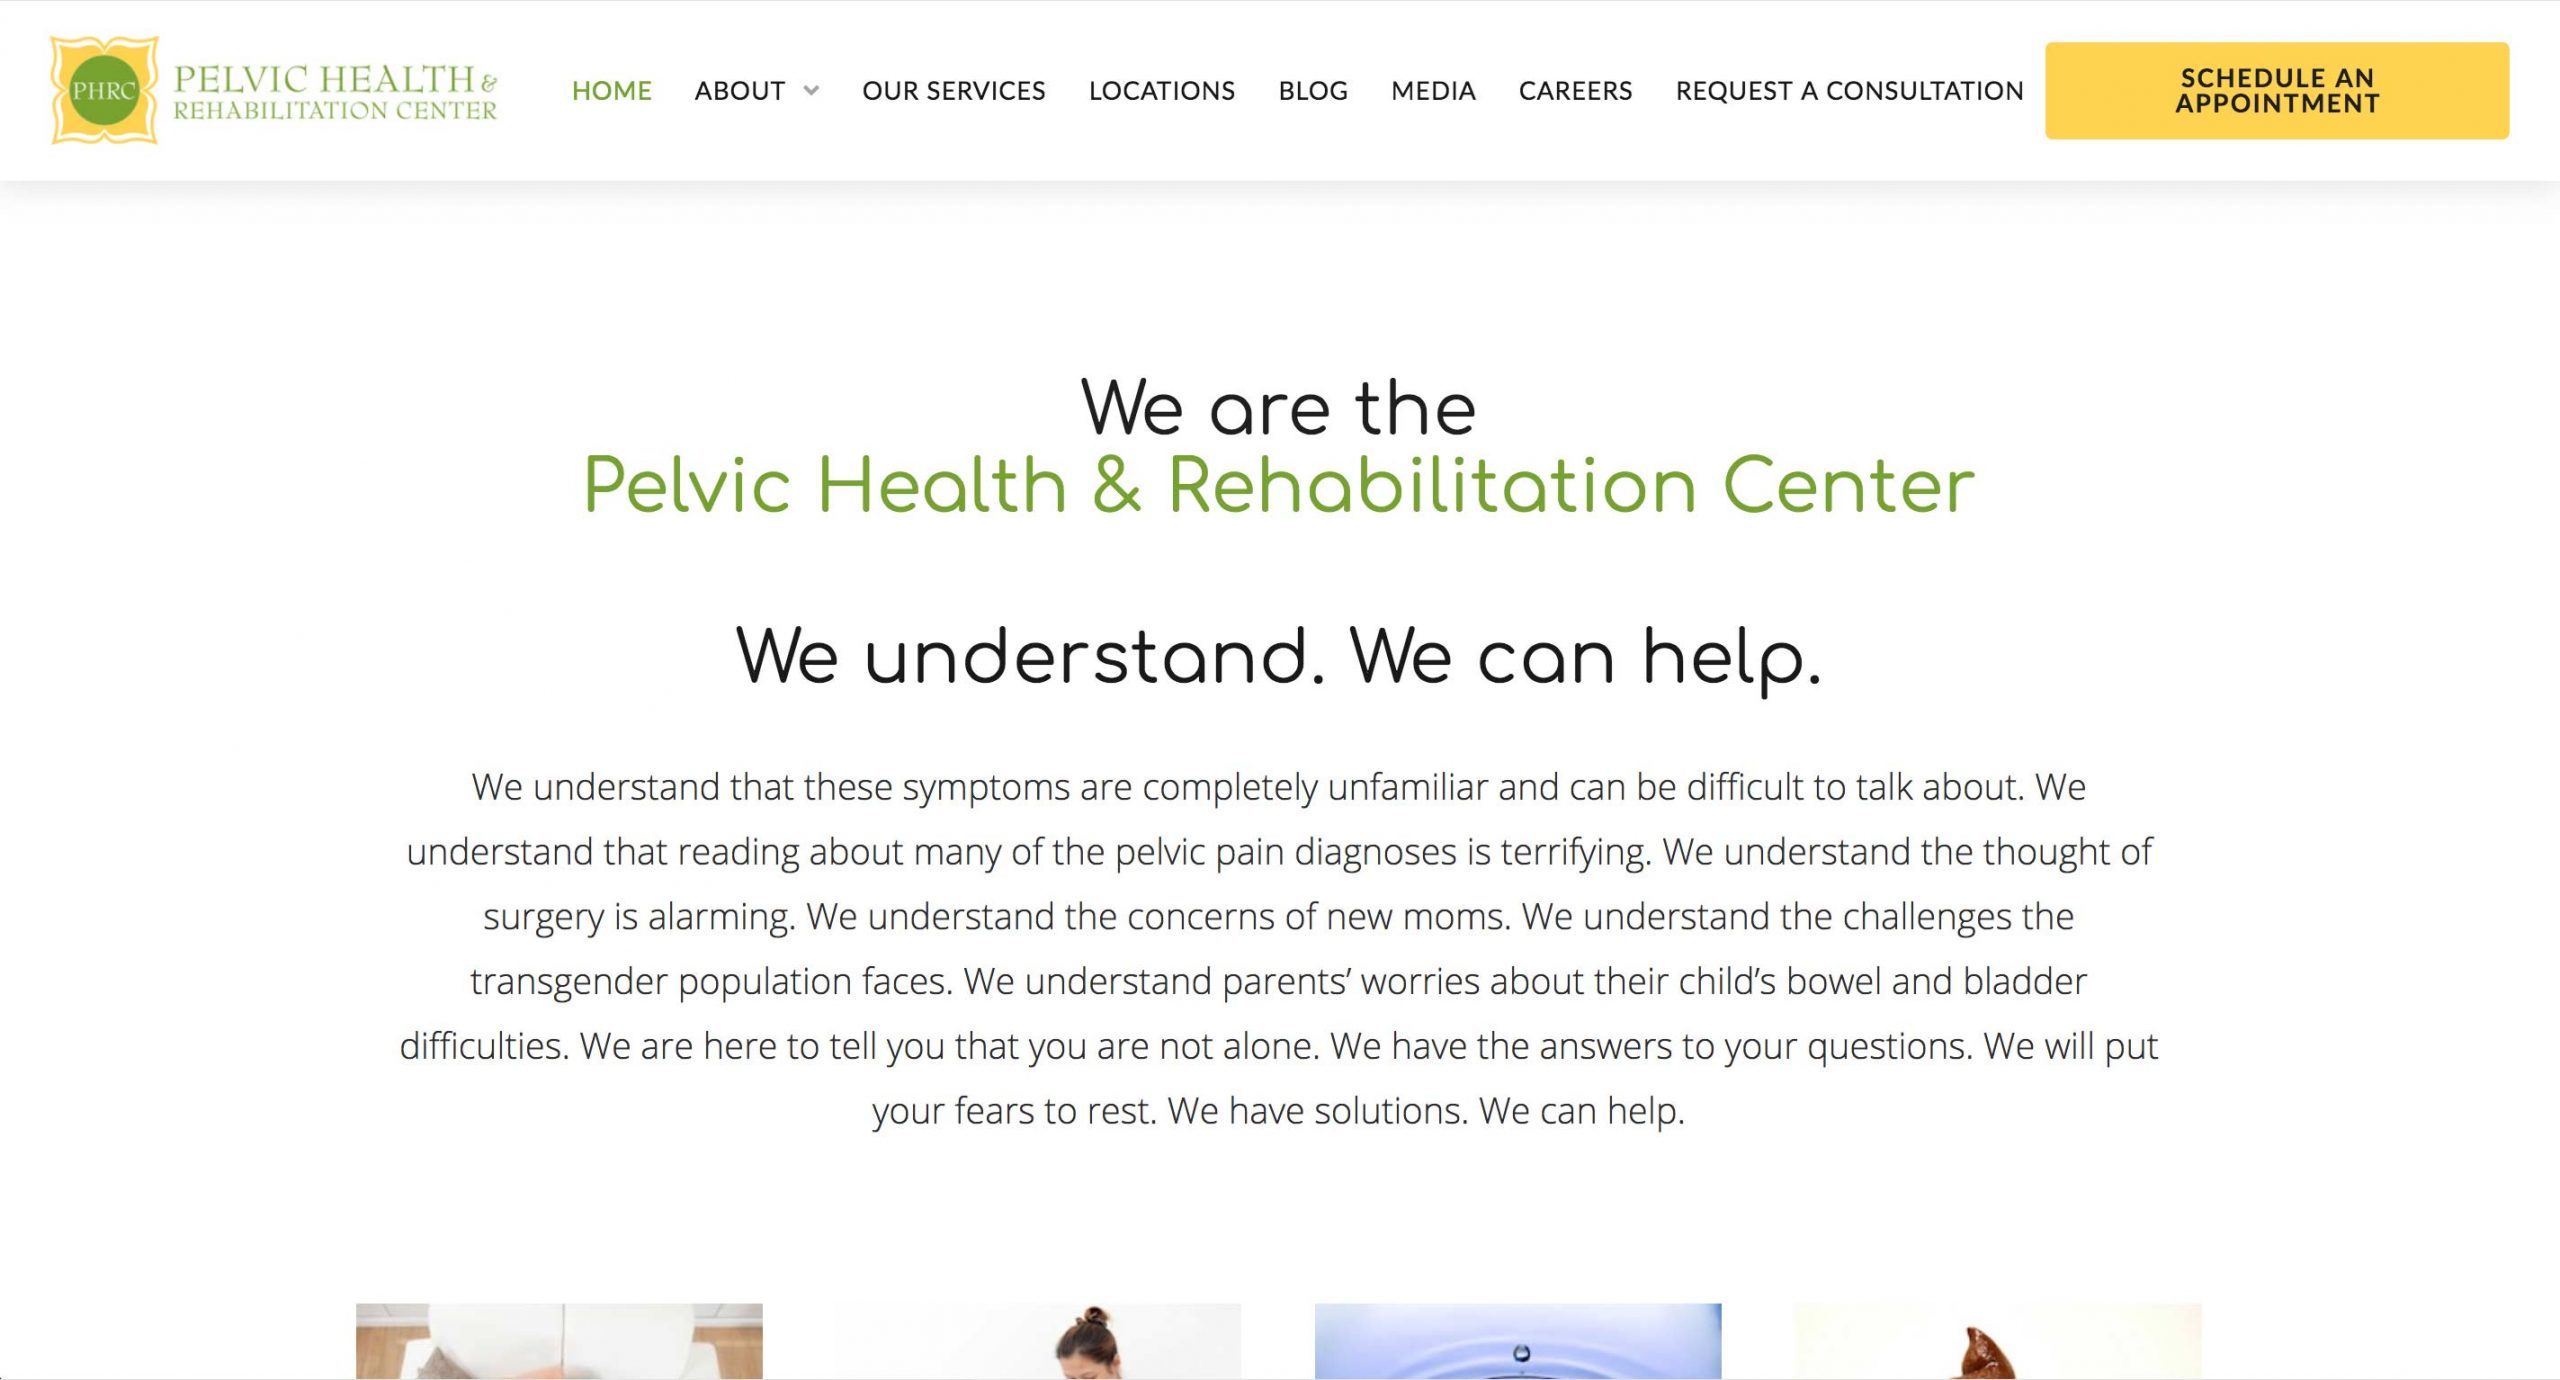 Pelvic Health and Rehabilitation Center Blog - Home Page